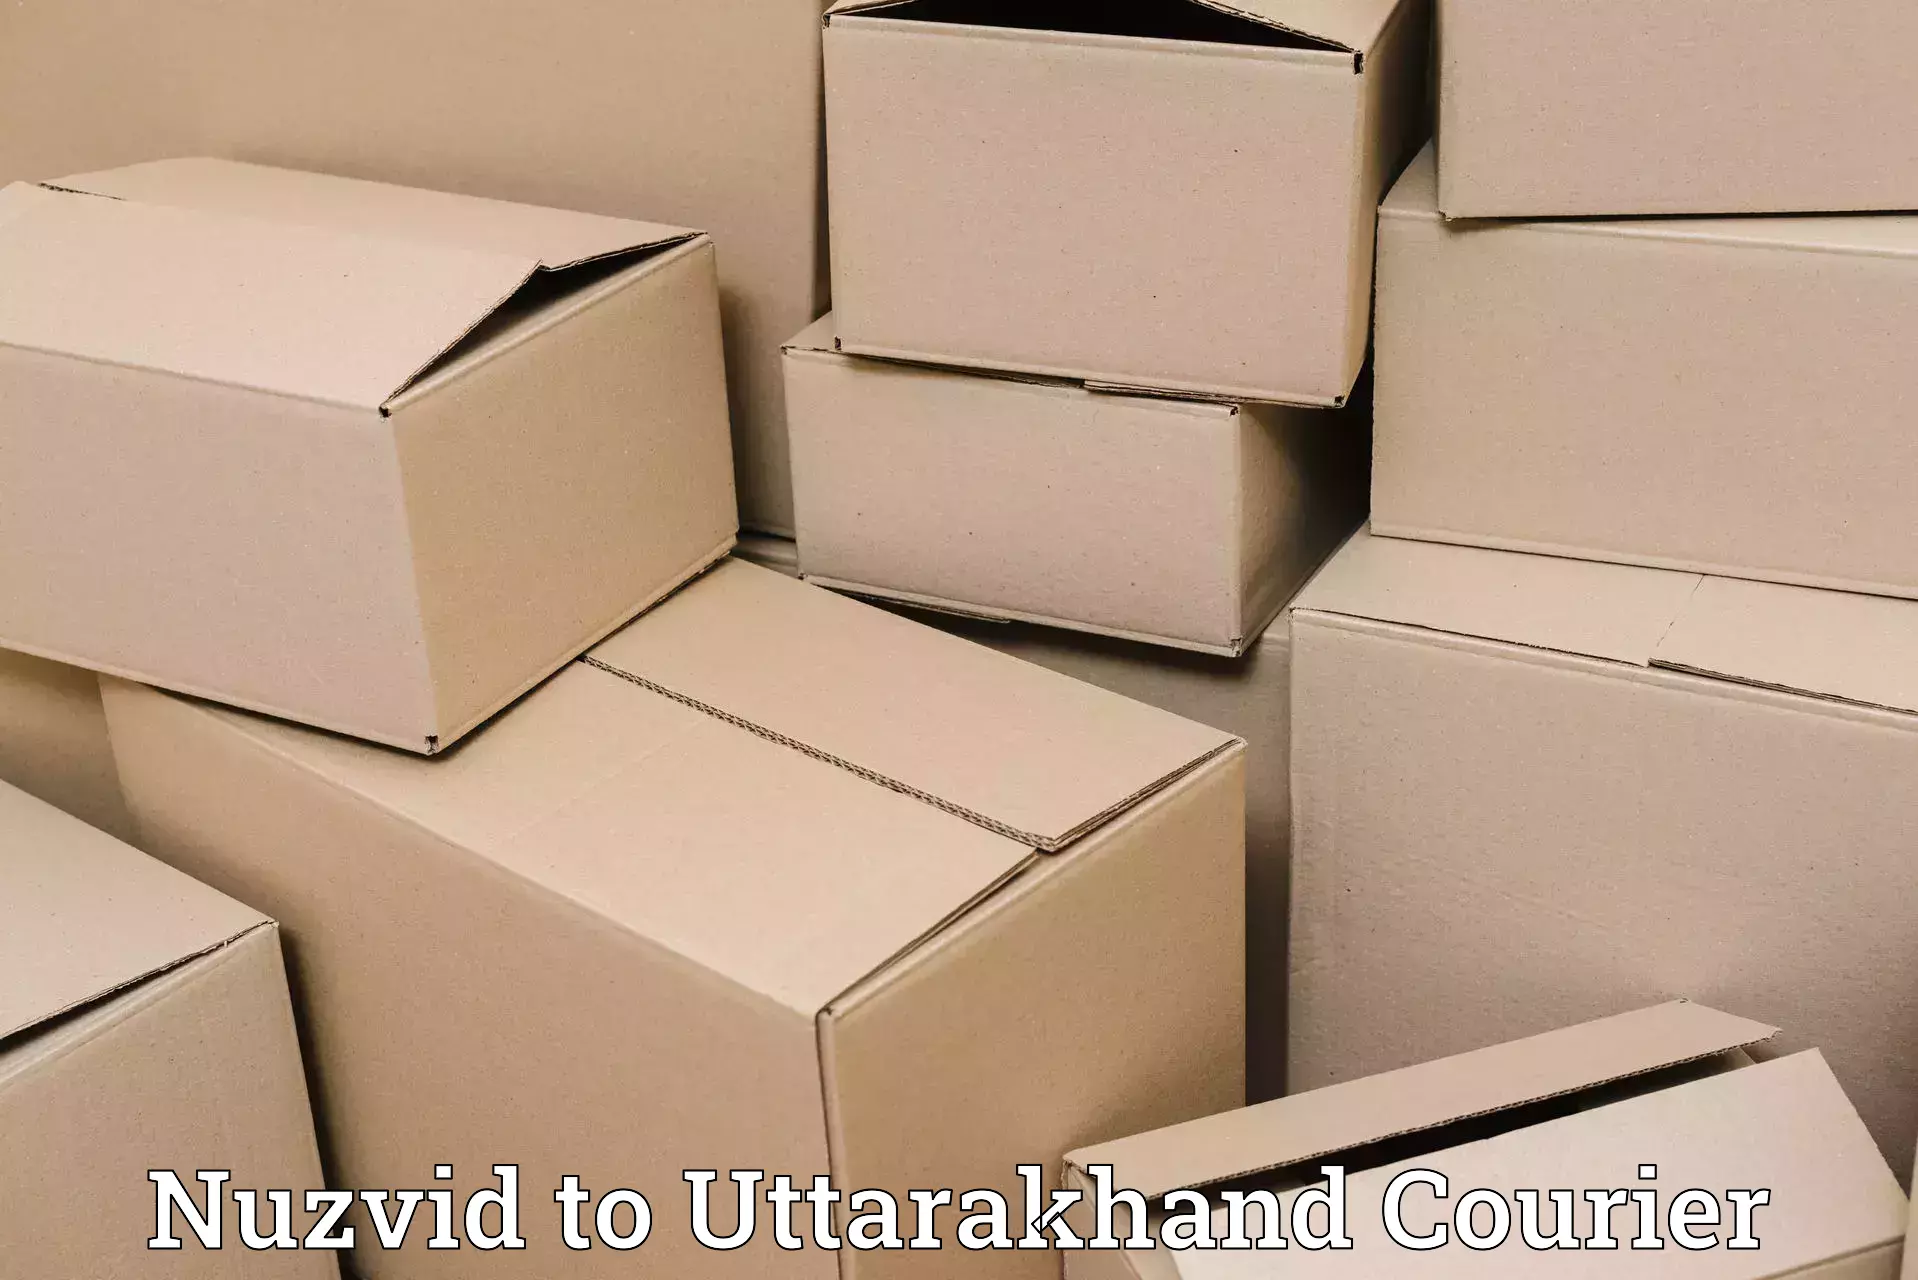 Flexible shipping options in Nuzvid to Haridwar